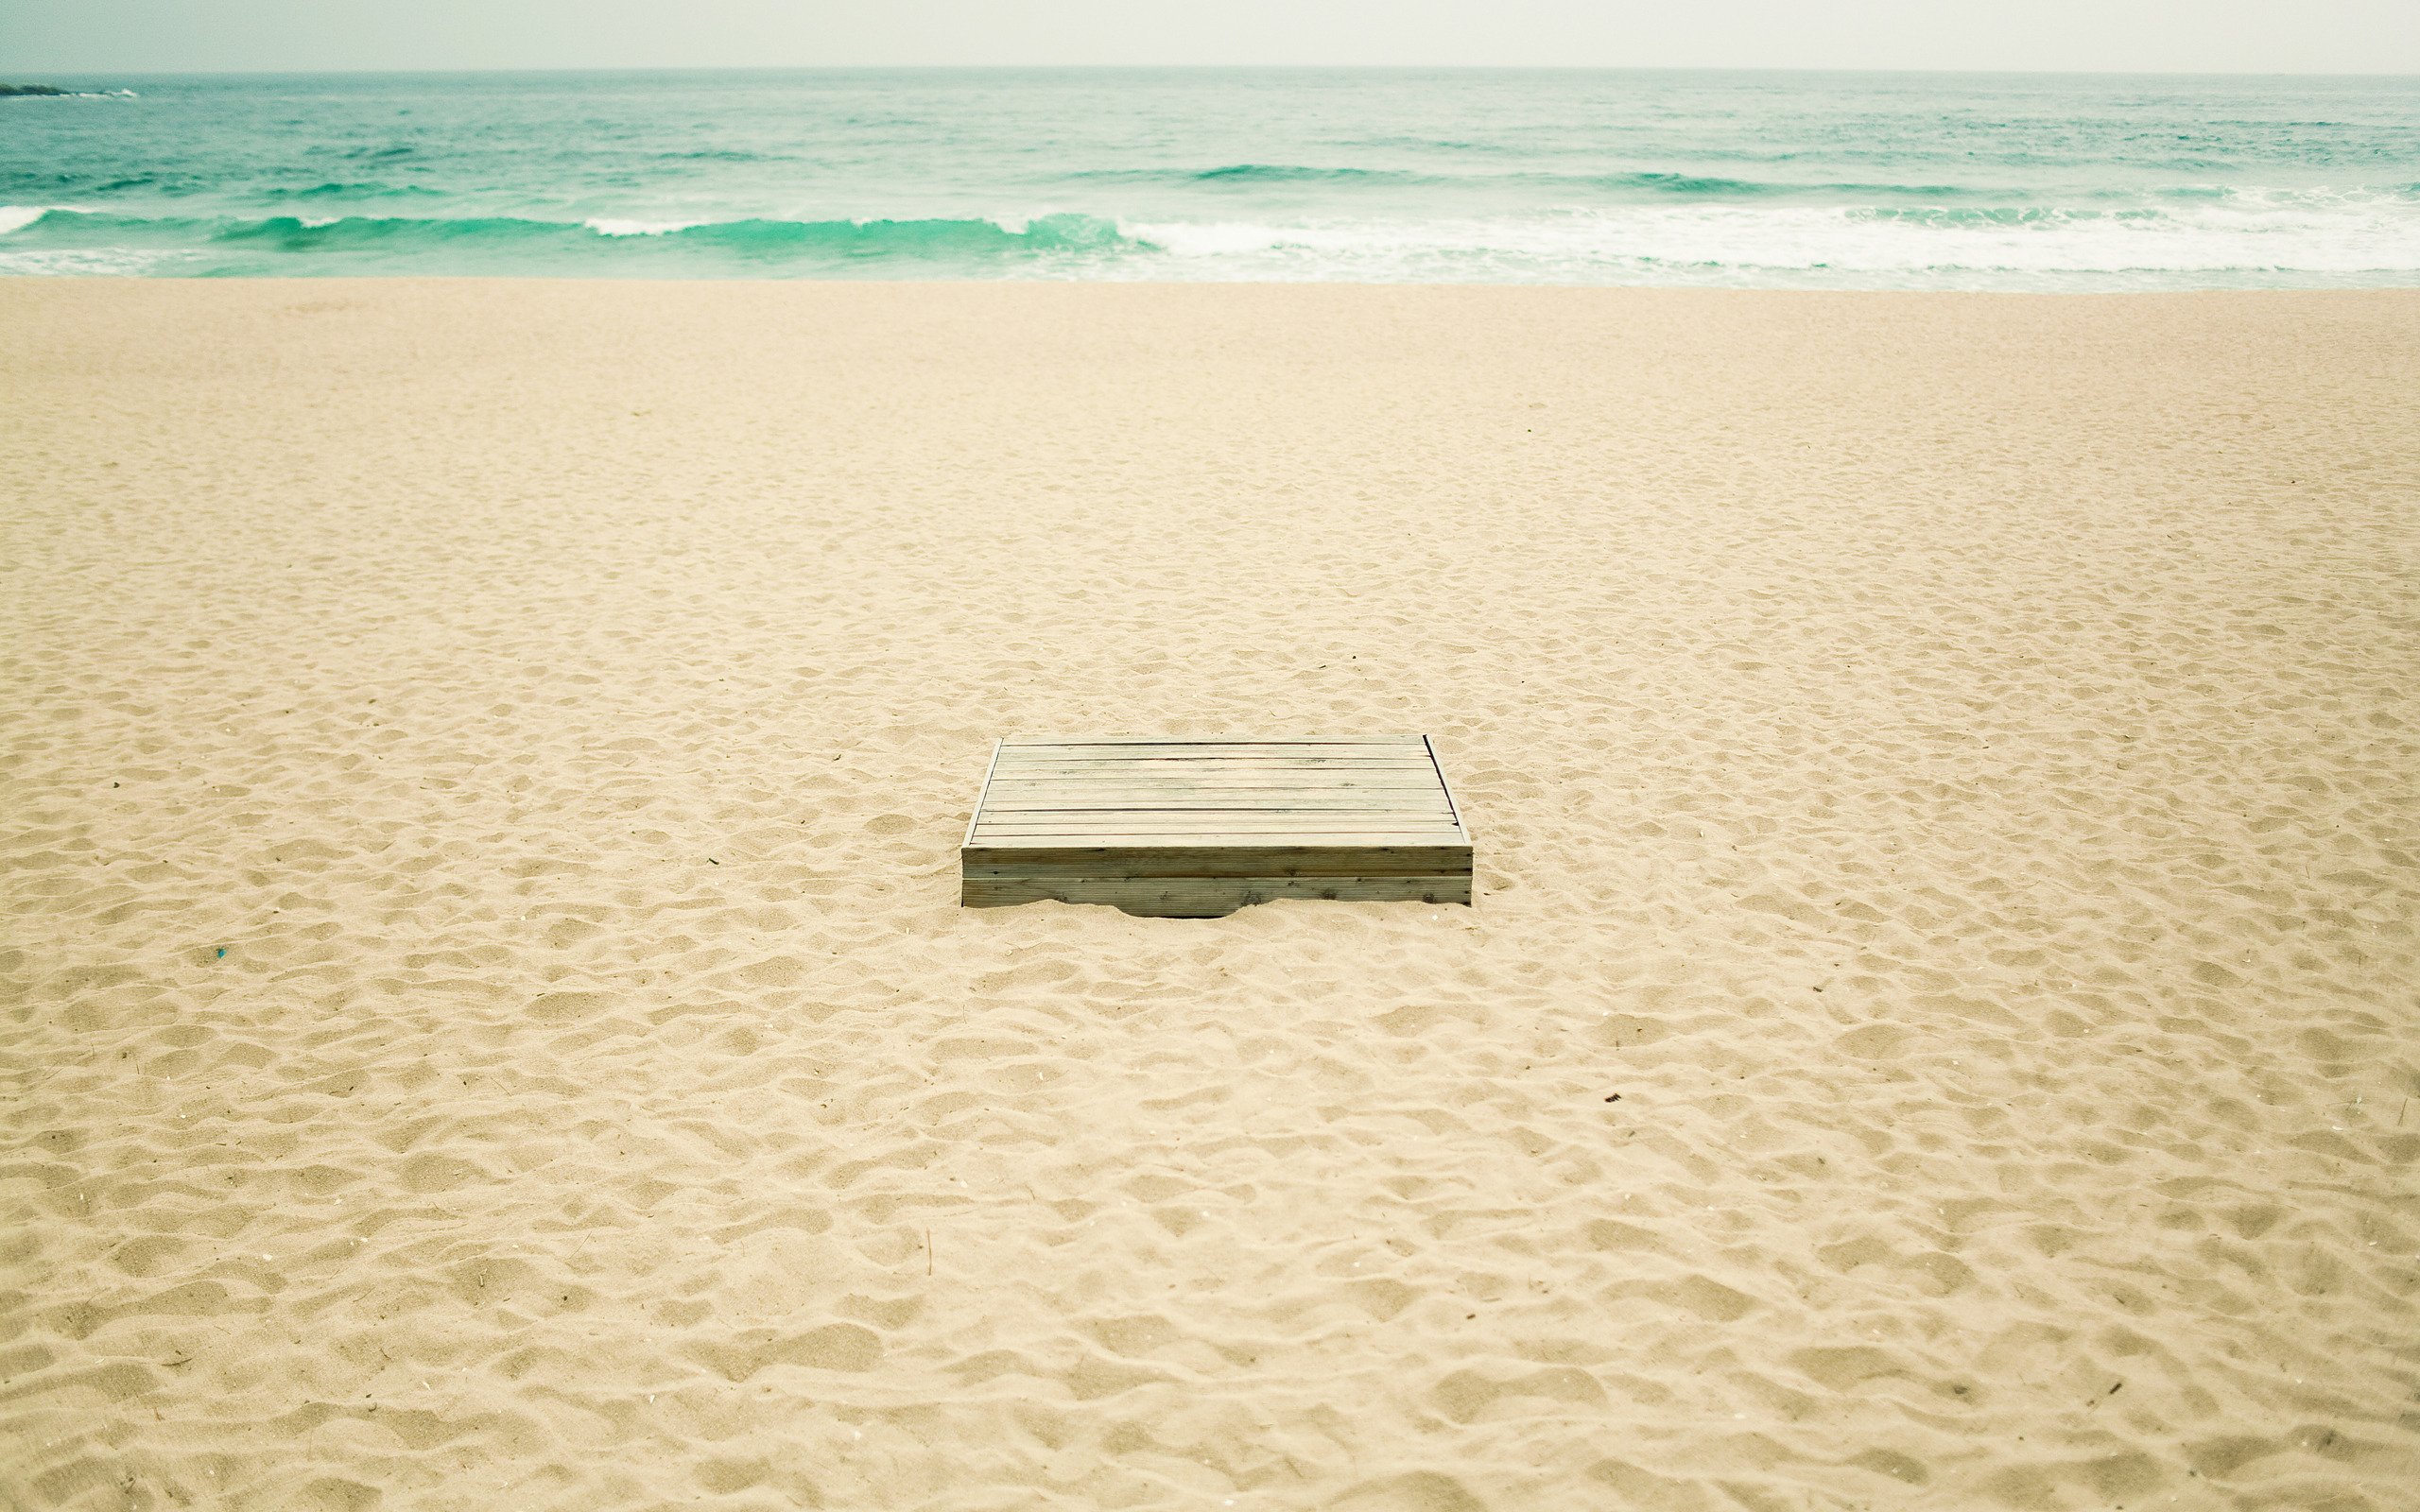 Ящик на пляже обои